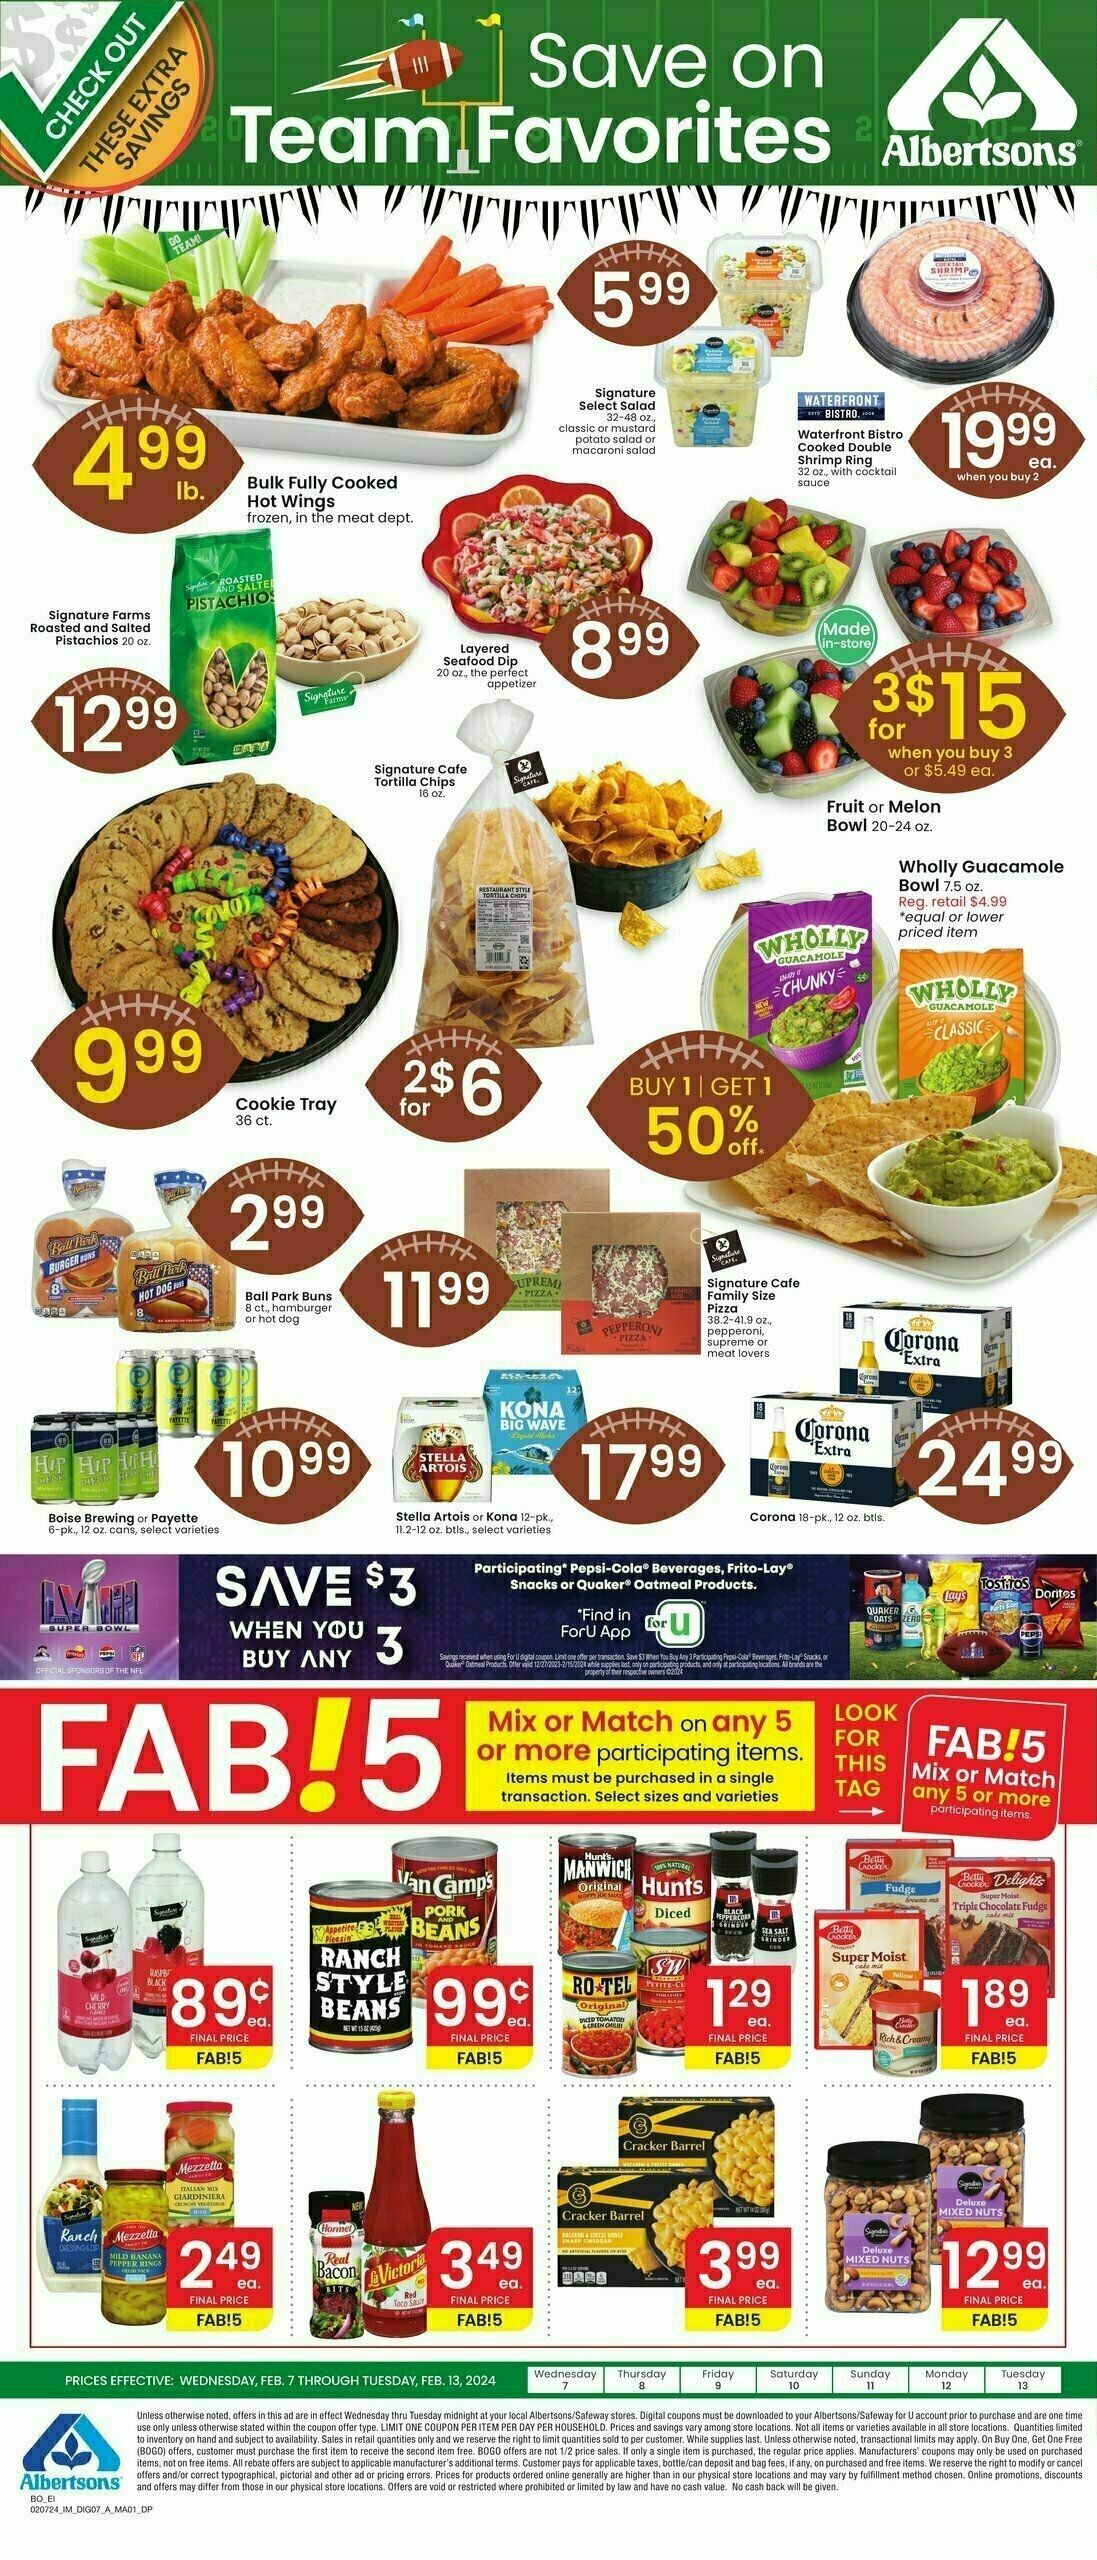 Albertsons Bonus Savings Weekly Ad from February 7